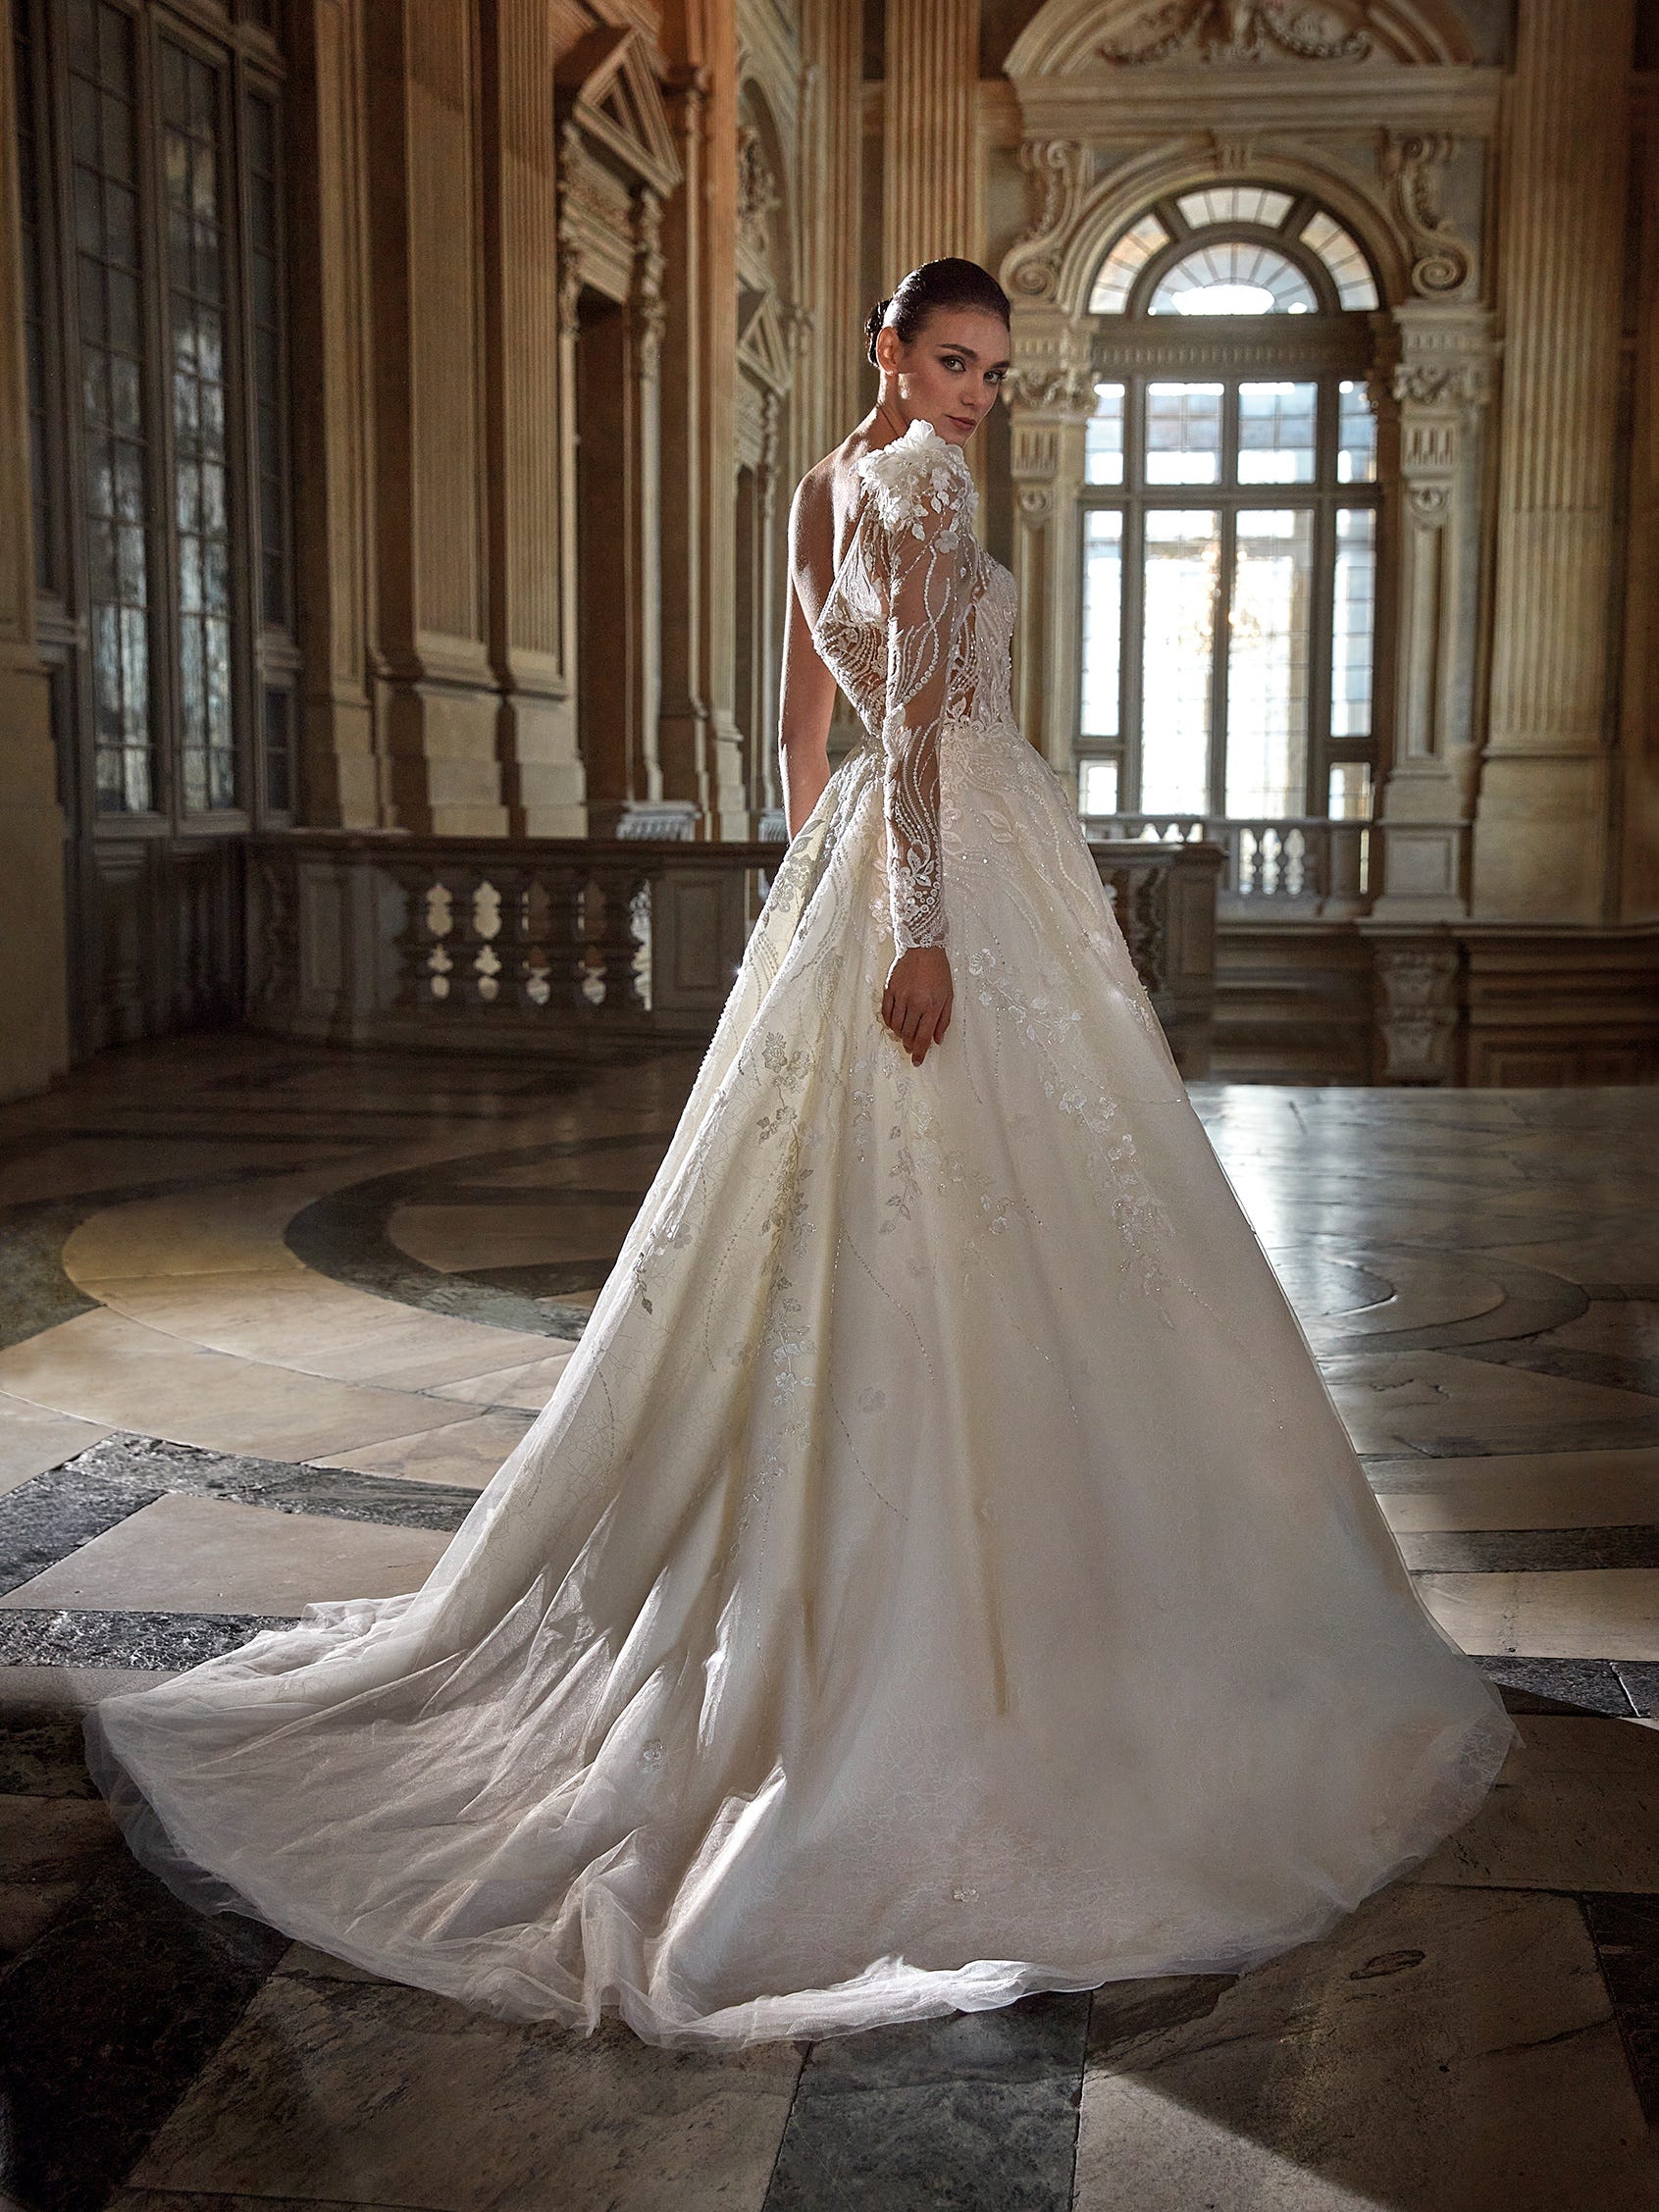 Simple, Minimalist Wedding Dresses That Will Stun On Your Big Day -  Lulus.com Fashion Blog